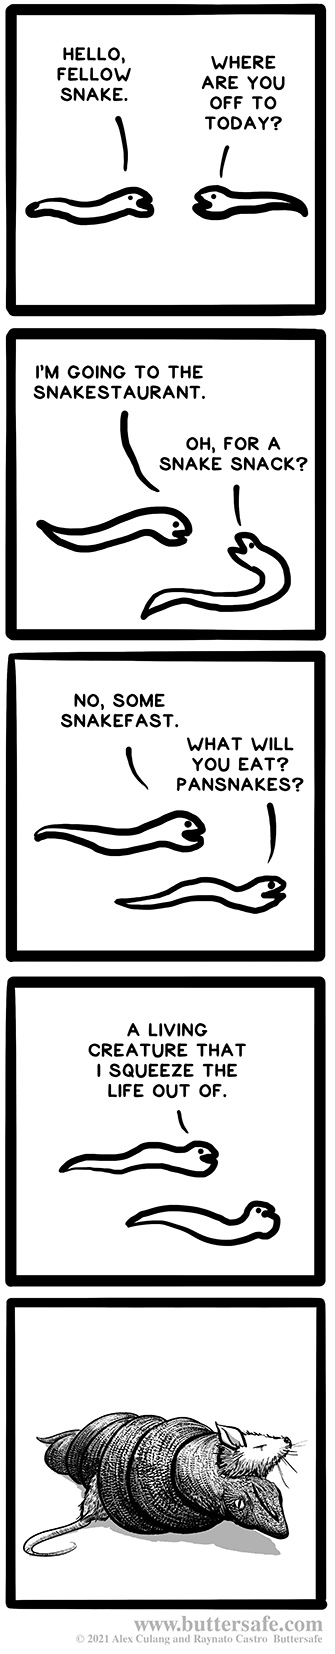 Snake Snack